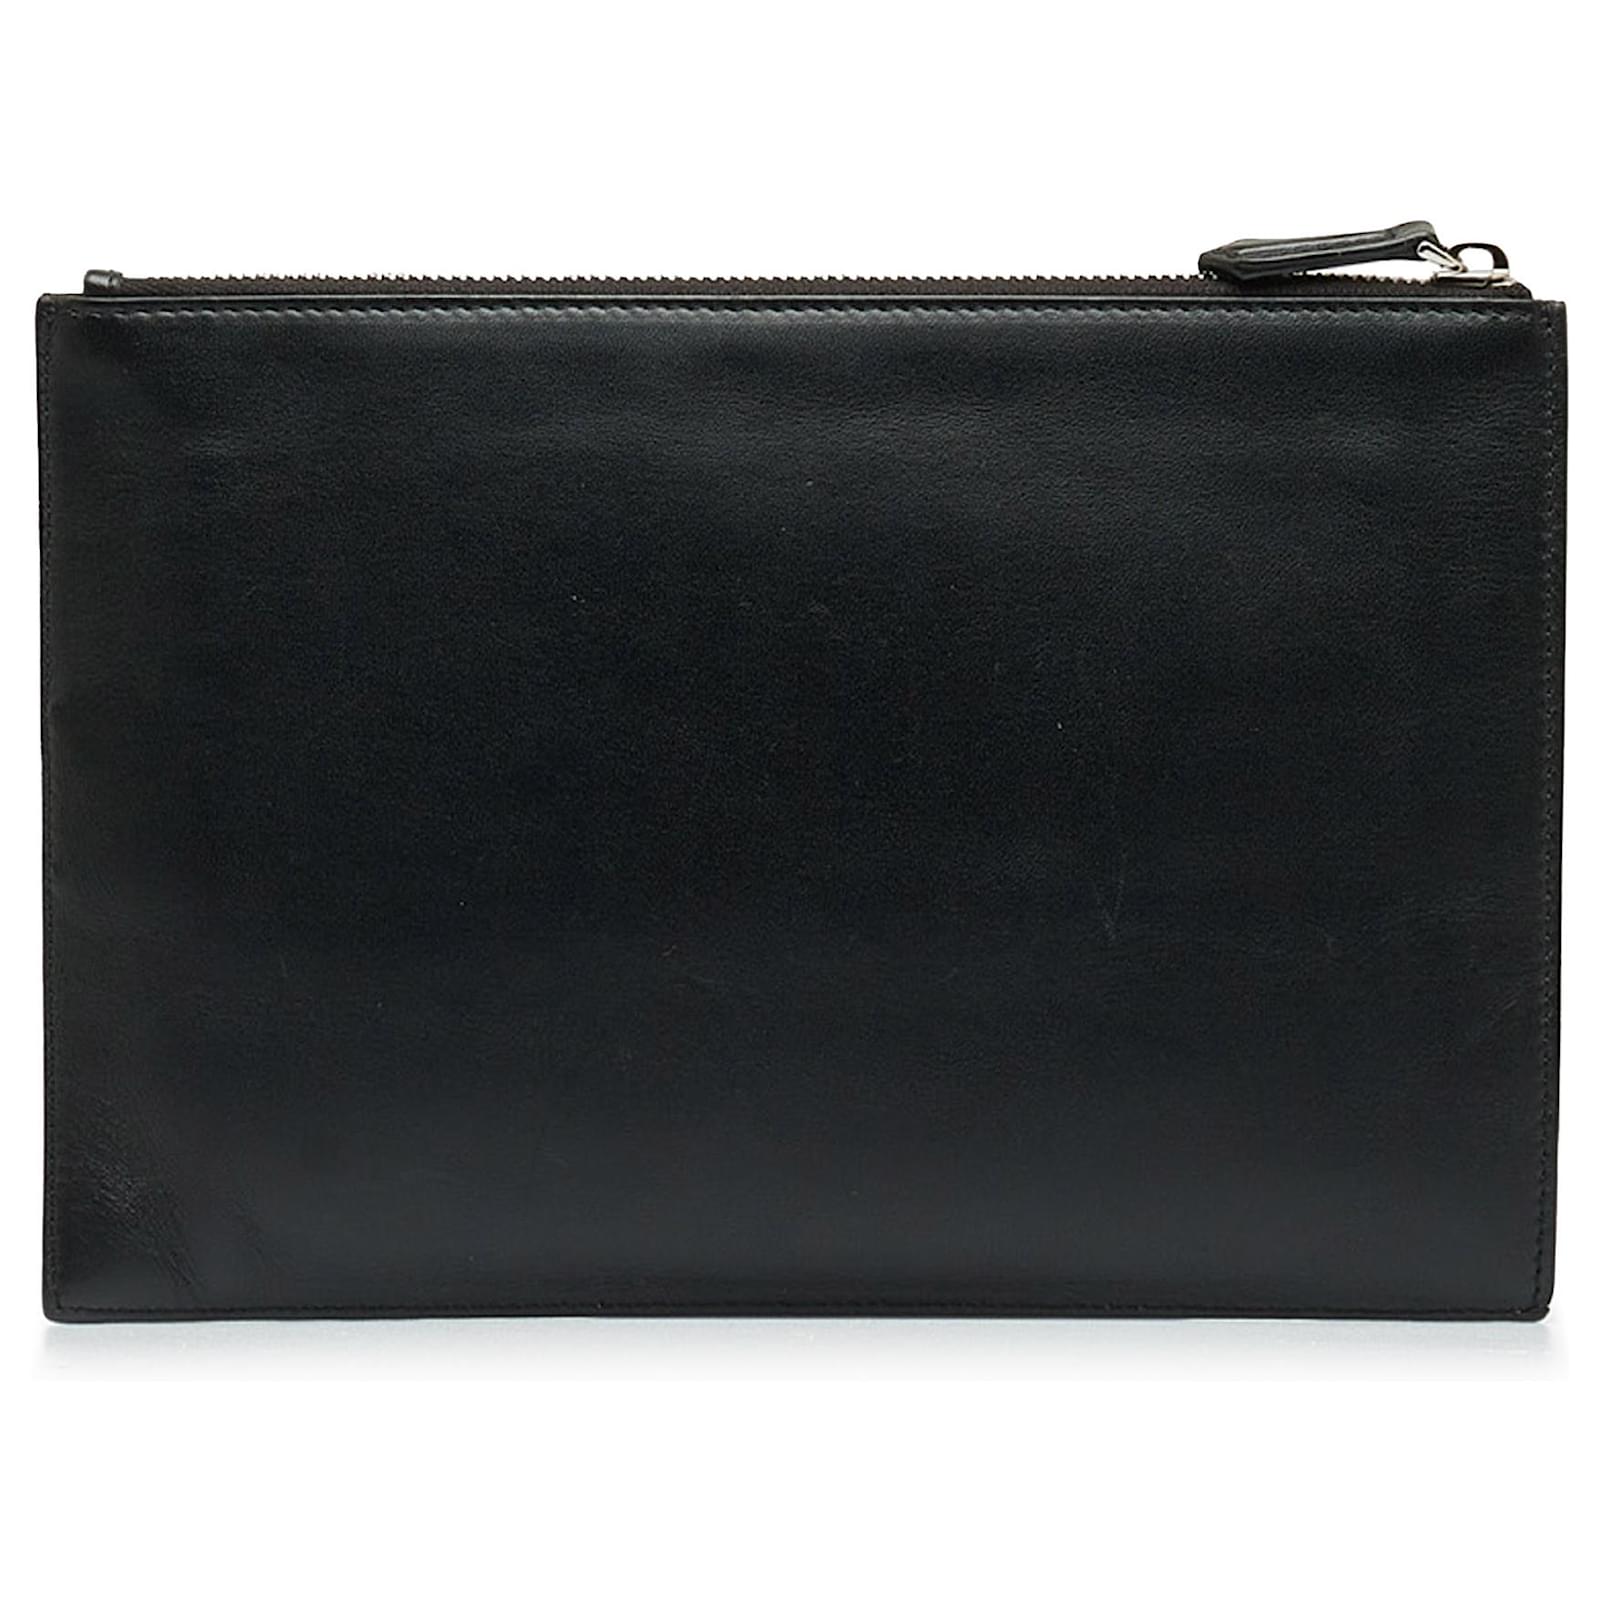 Fendi Ff Envelope Clutch Bag in Black